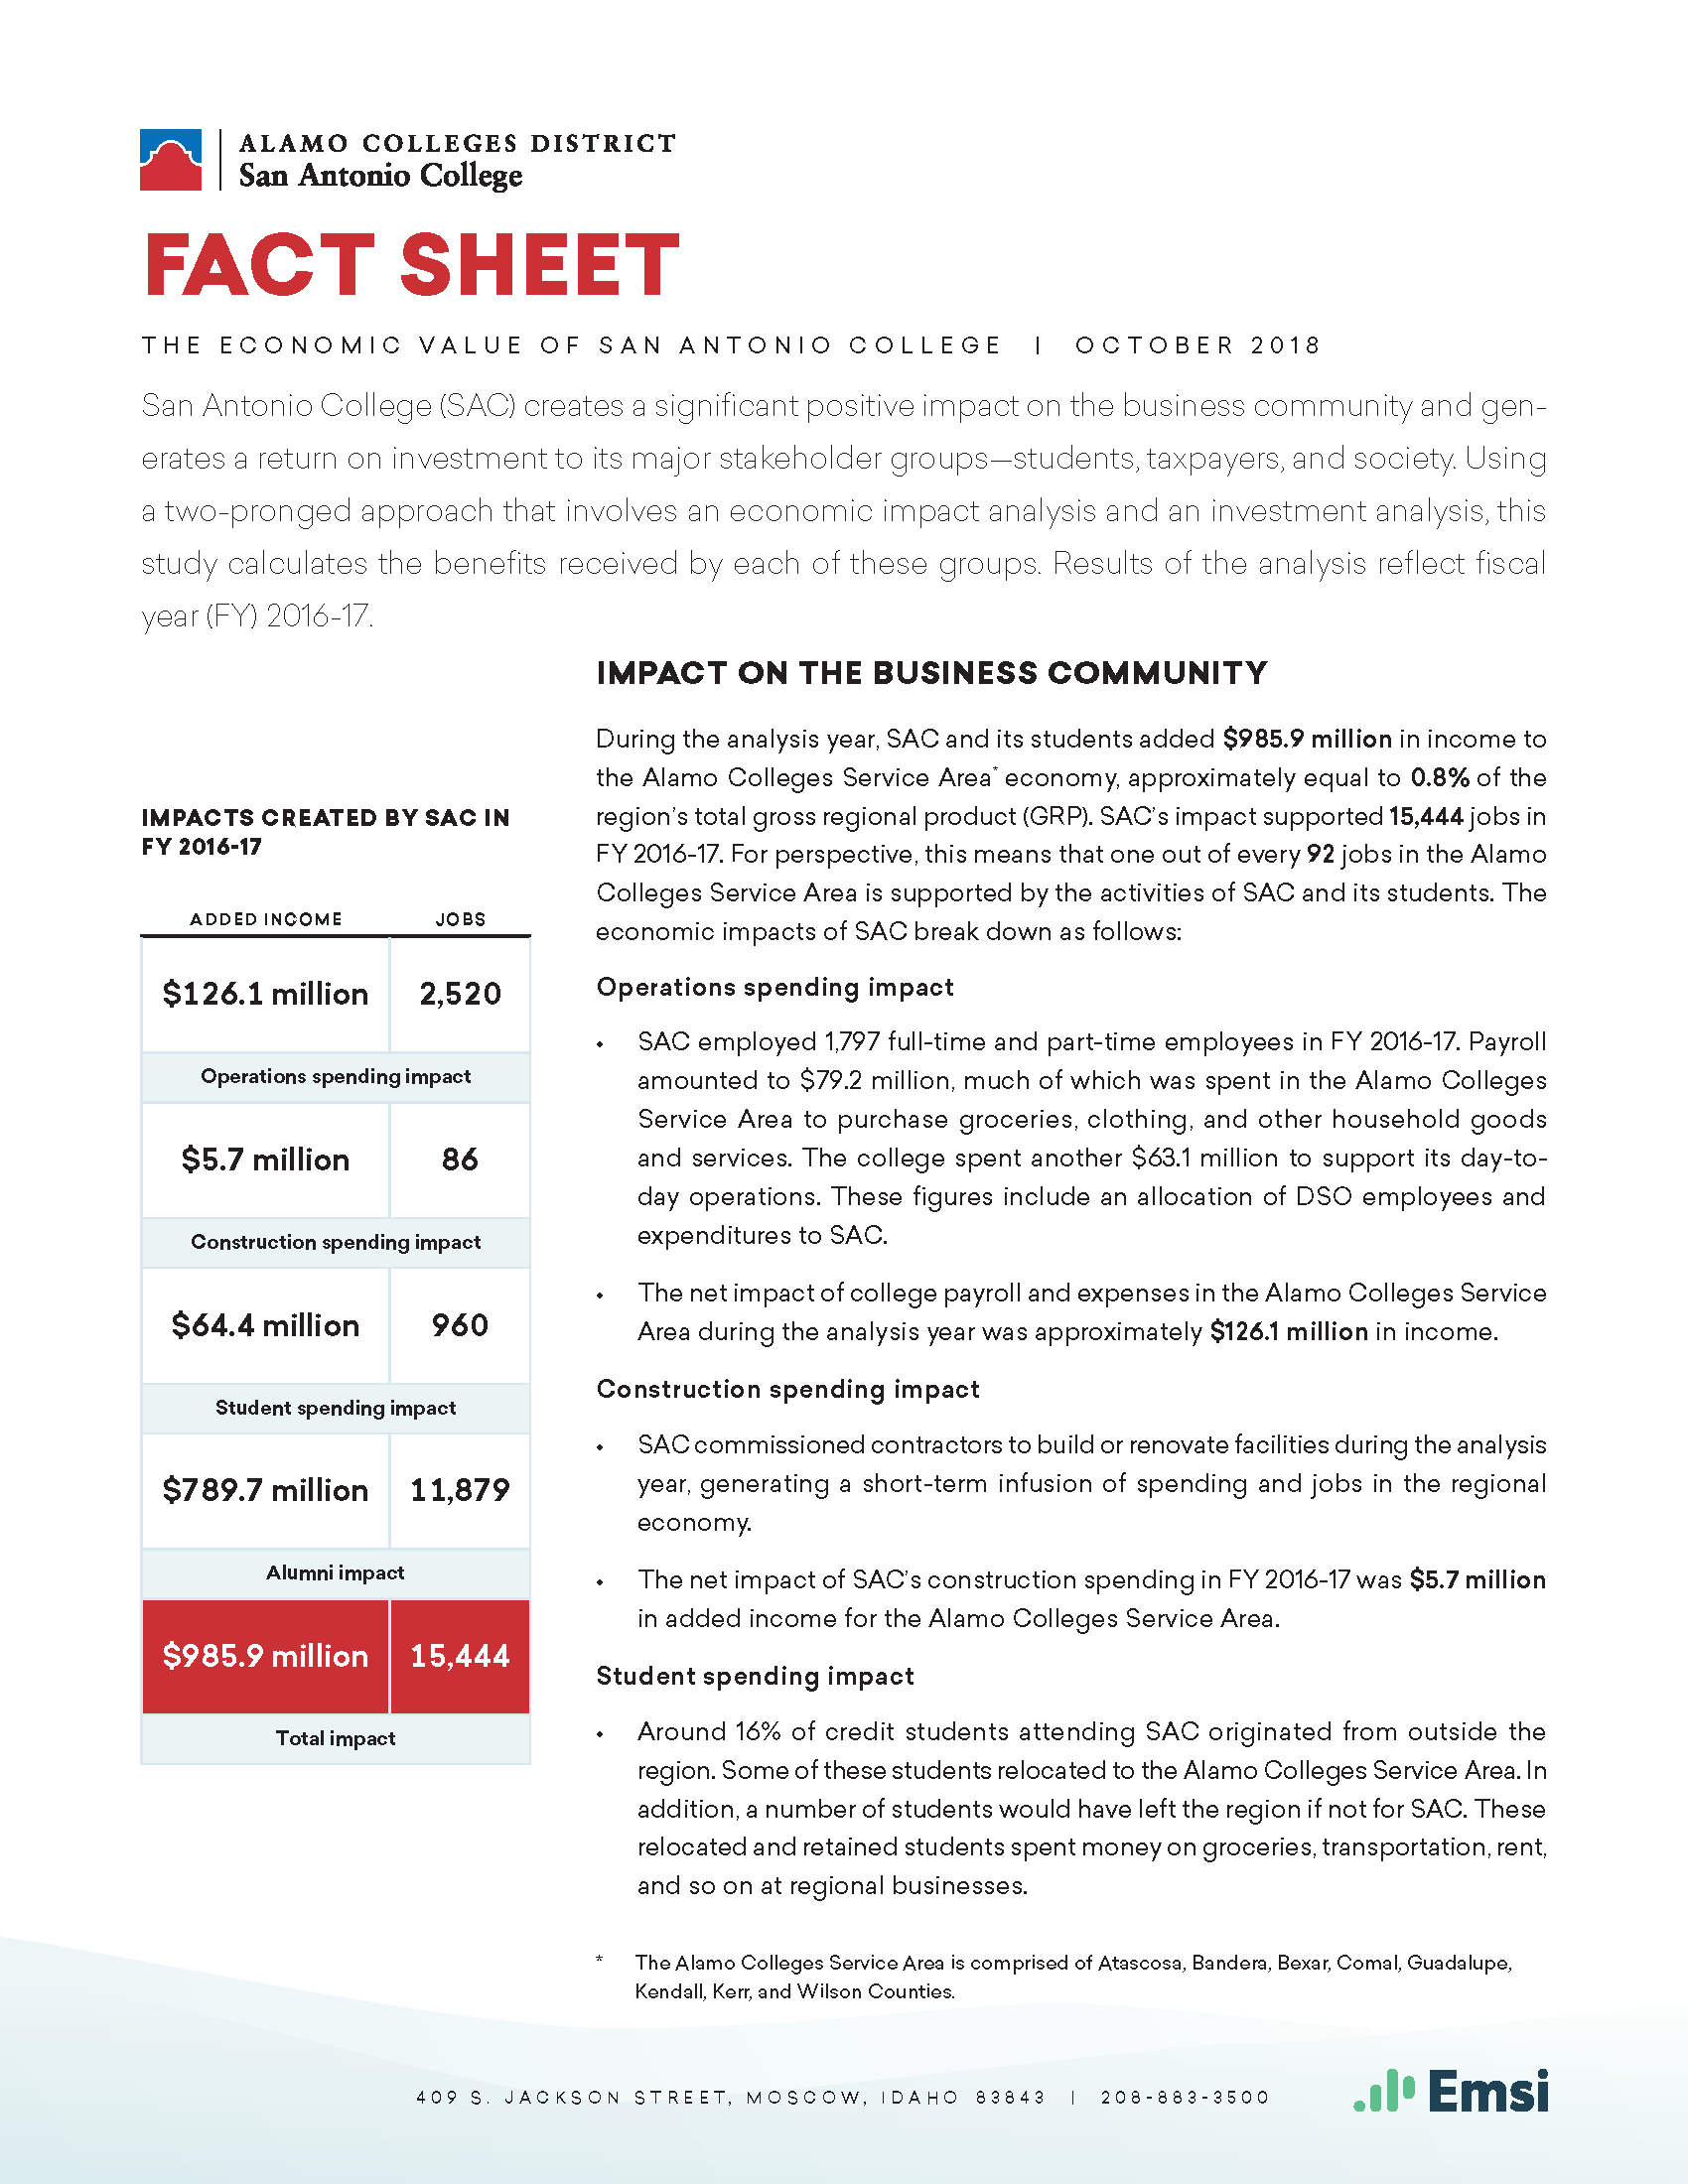 San Antonio College Fact Sheet Front Page Image